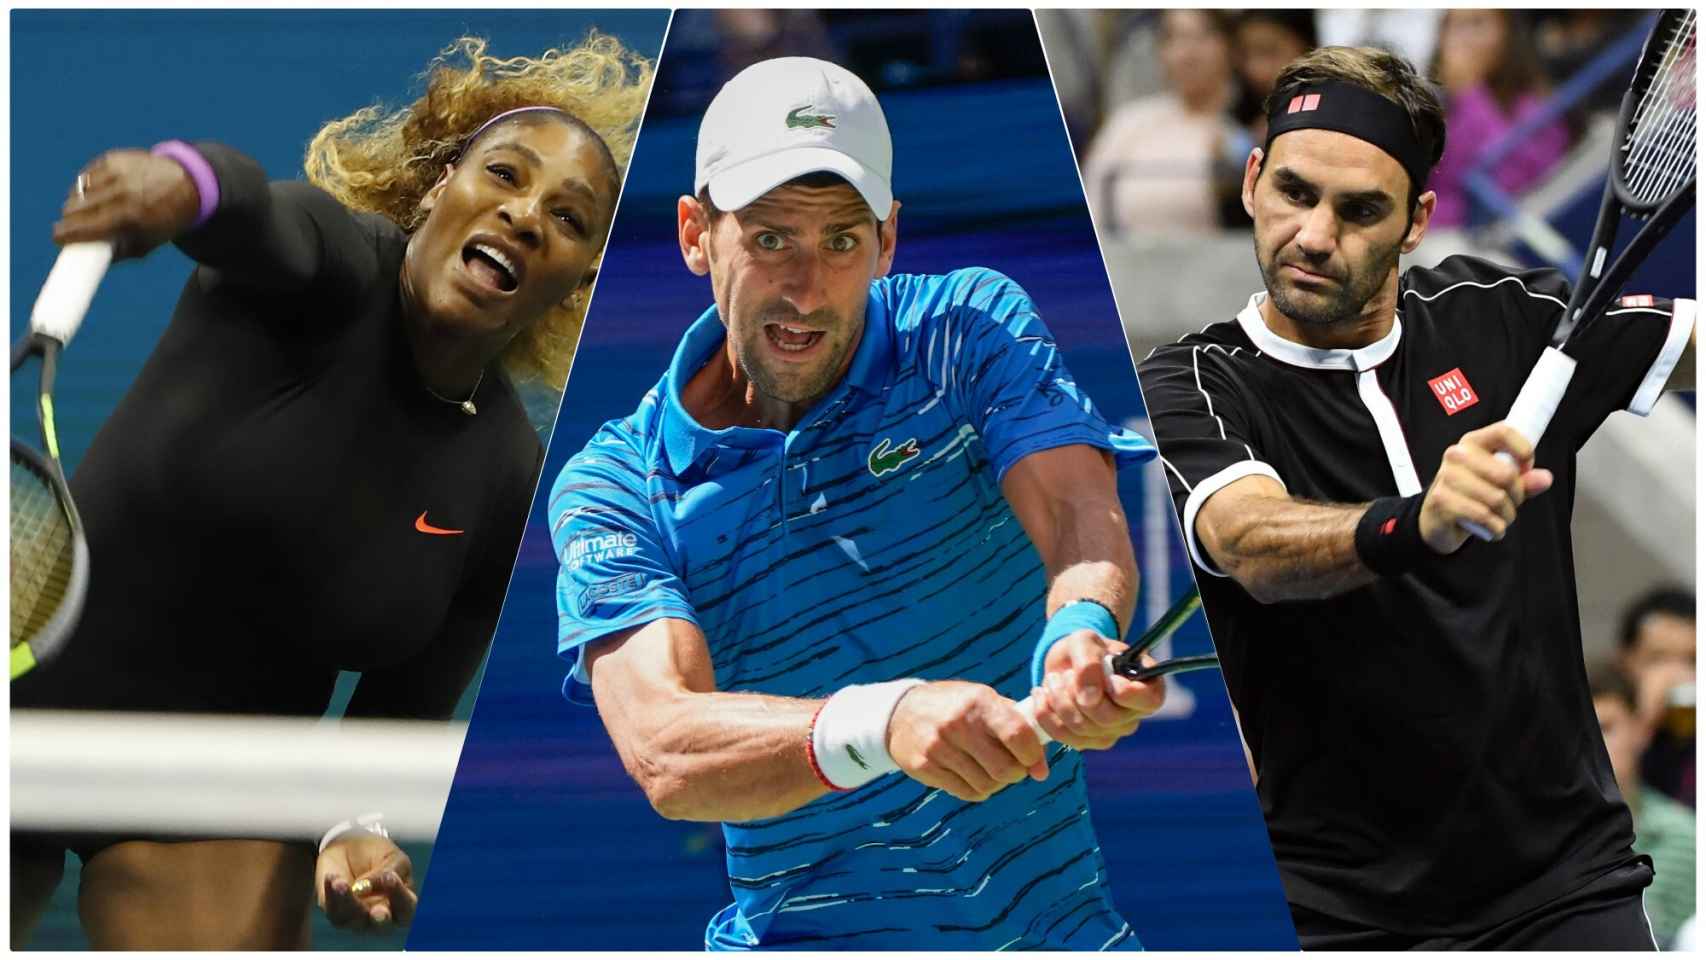 Serena Williams, Novak Djokovic y Roger Federer en el US Open 2019.